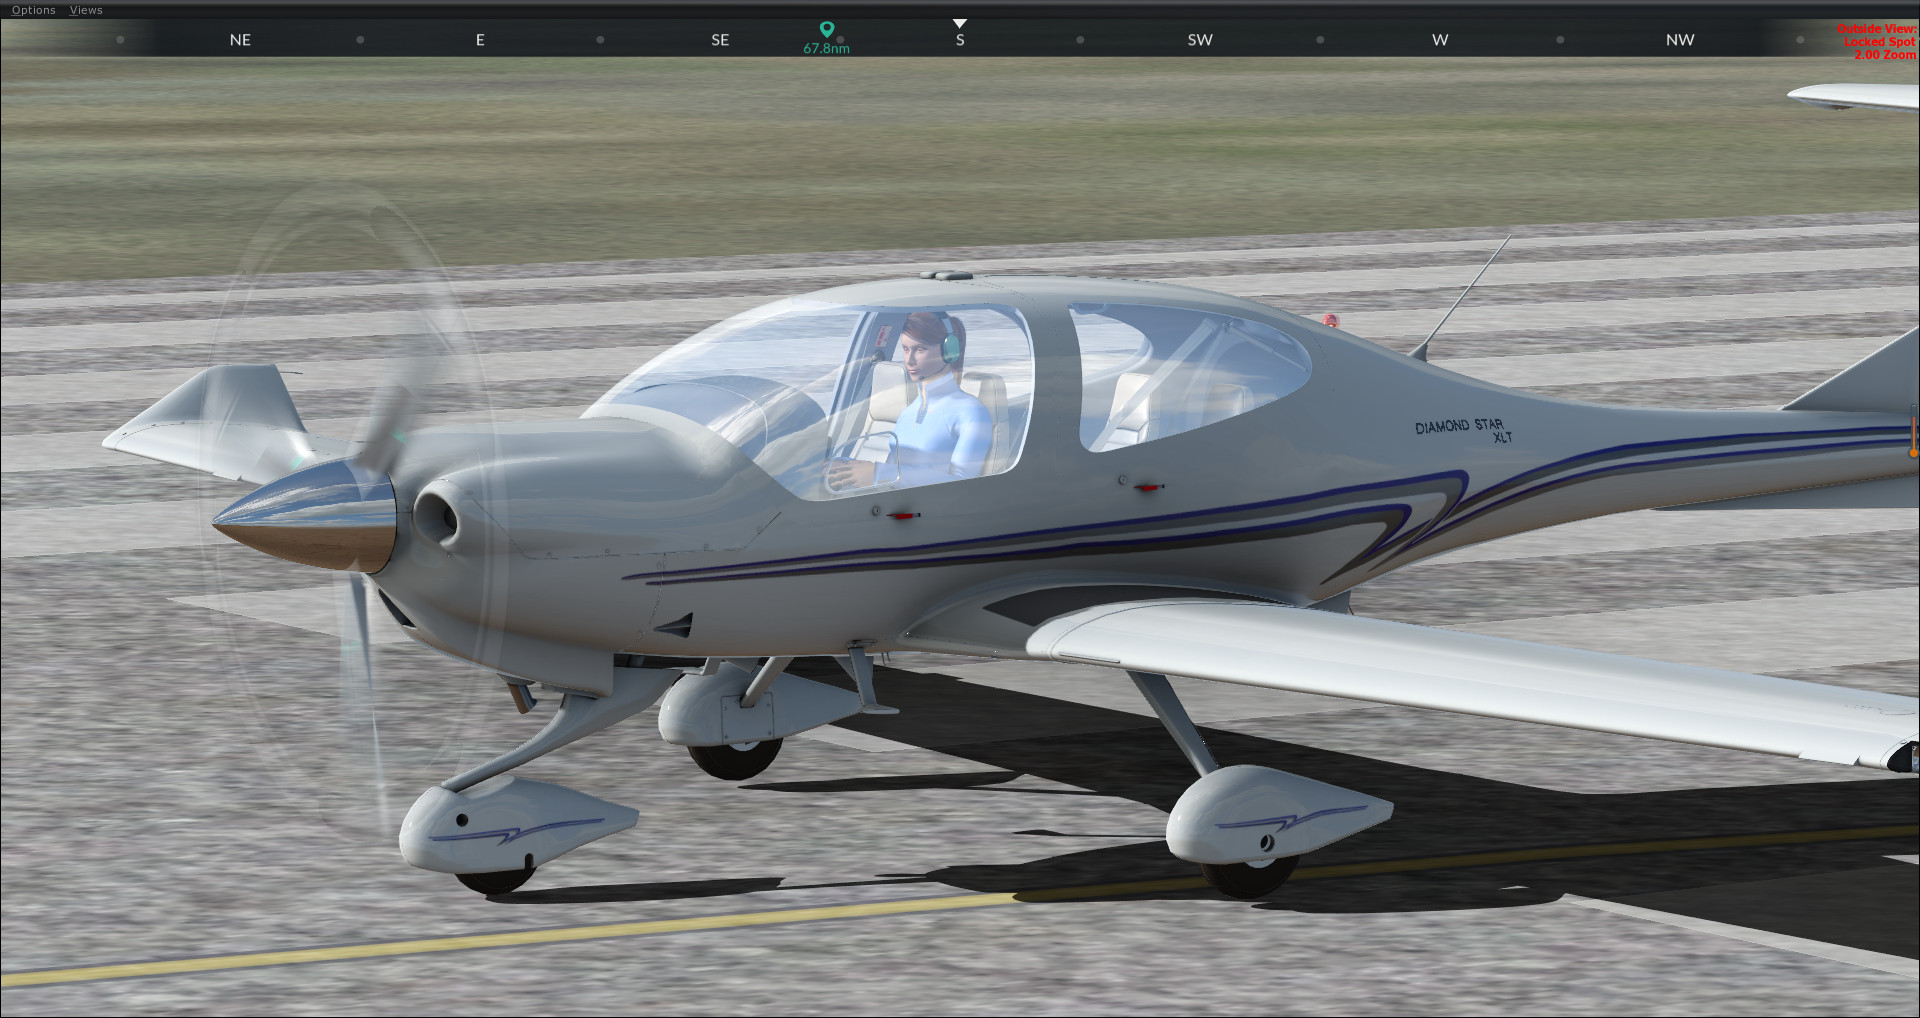 Flight Sim World默认七款小型飞机图片-9090 